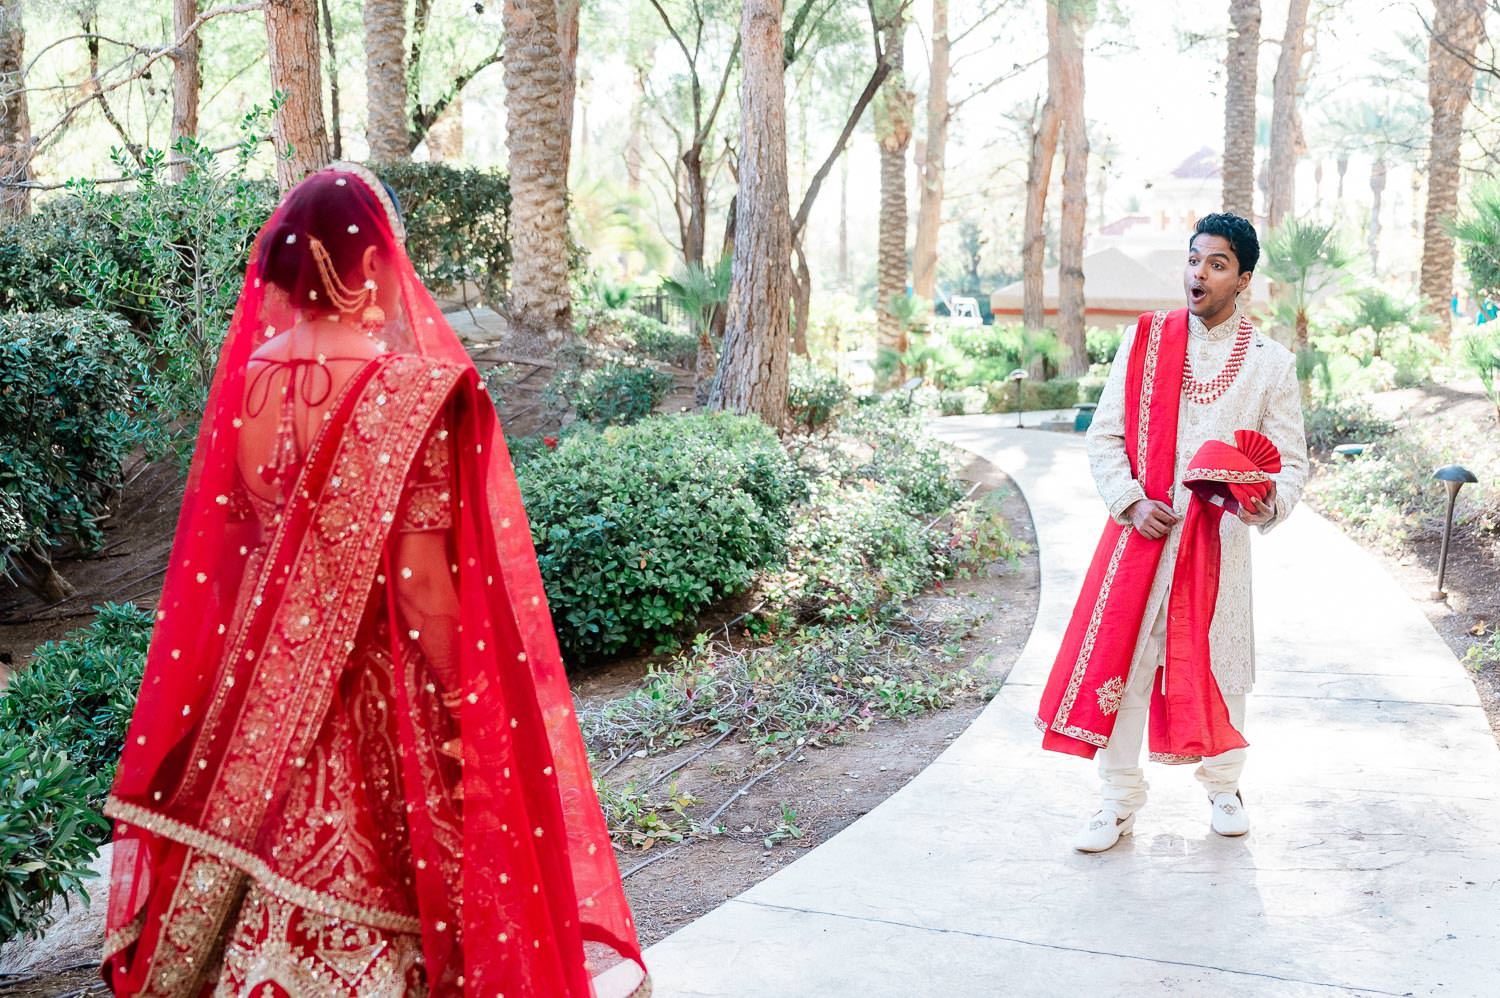 Las Vegas Indian Wedding | JW Marriott | Kristen Marie Weddings + Portraits